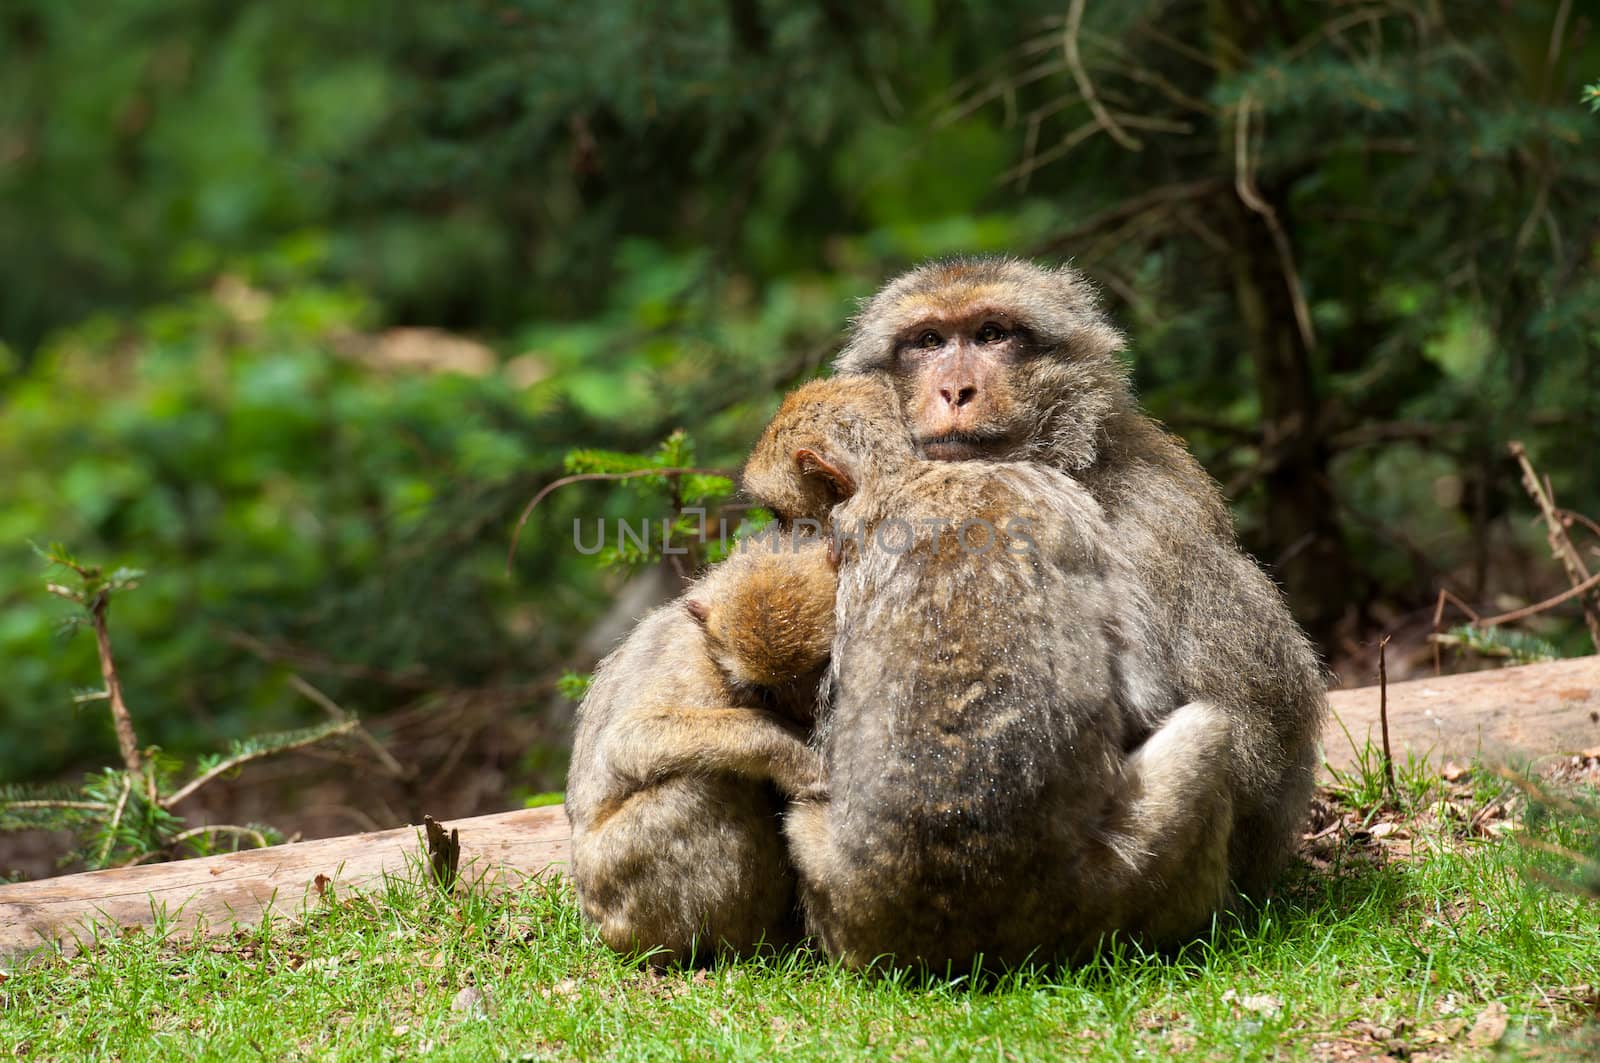 Berber Monkeys by Rainman